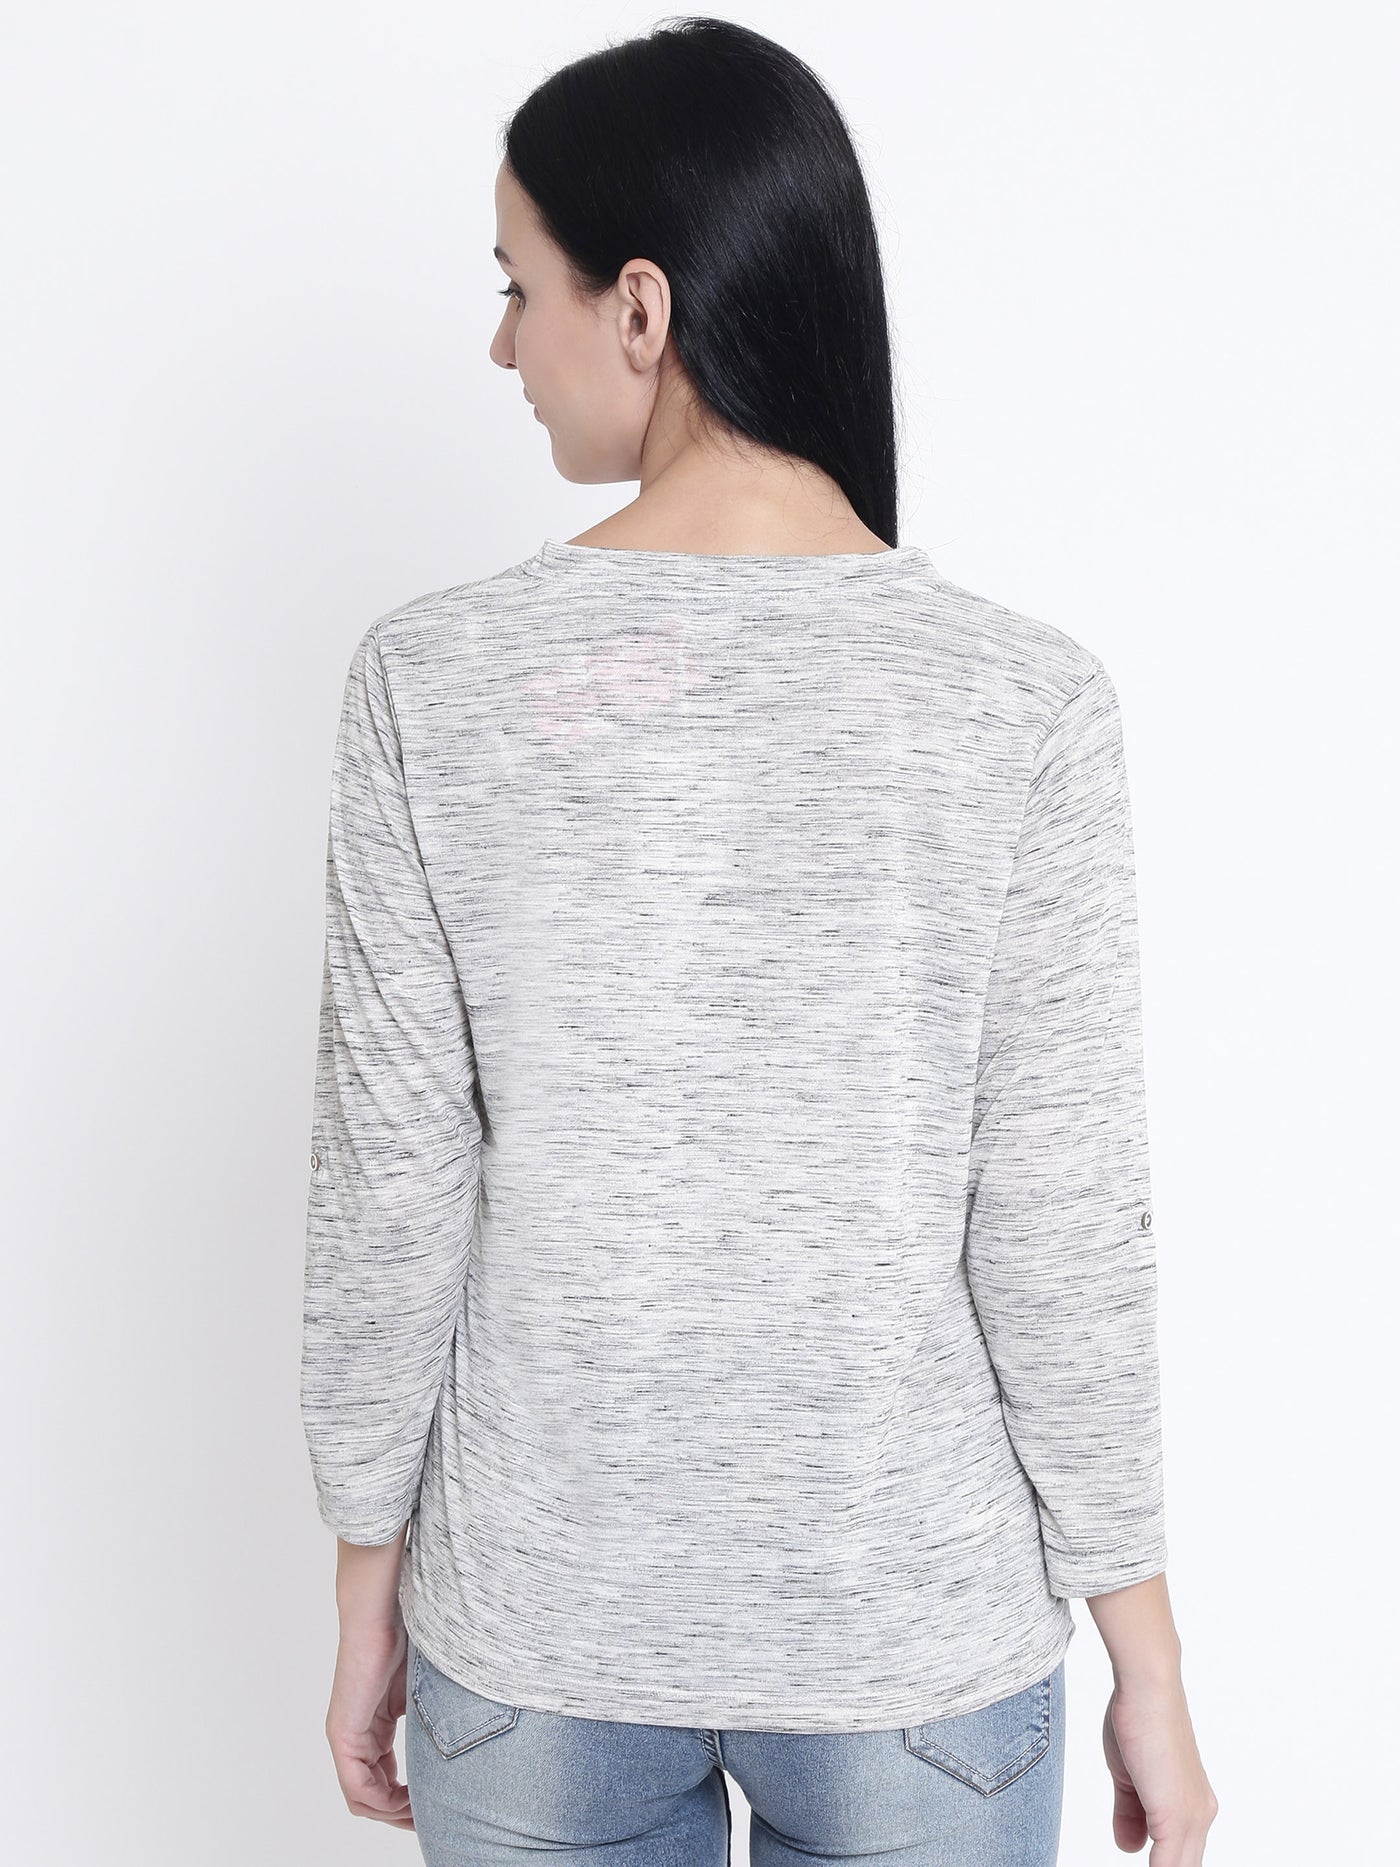 Grey Roll up Sleeves T-shirt - Women T-Shirts